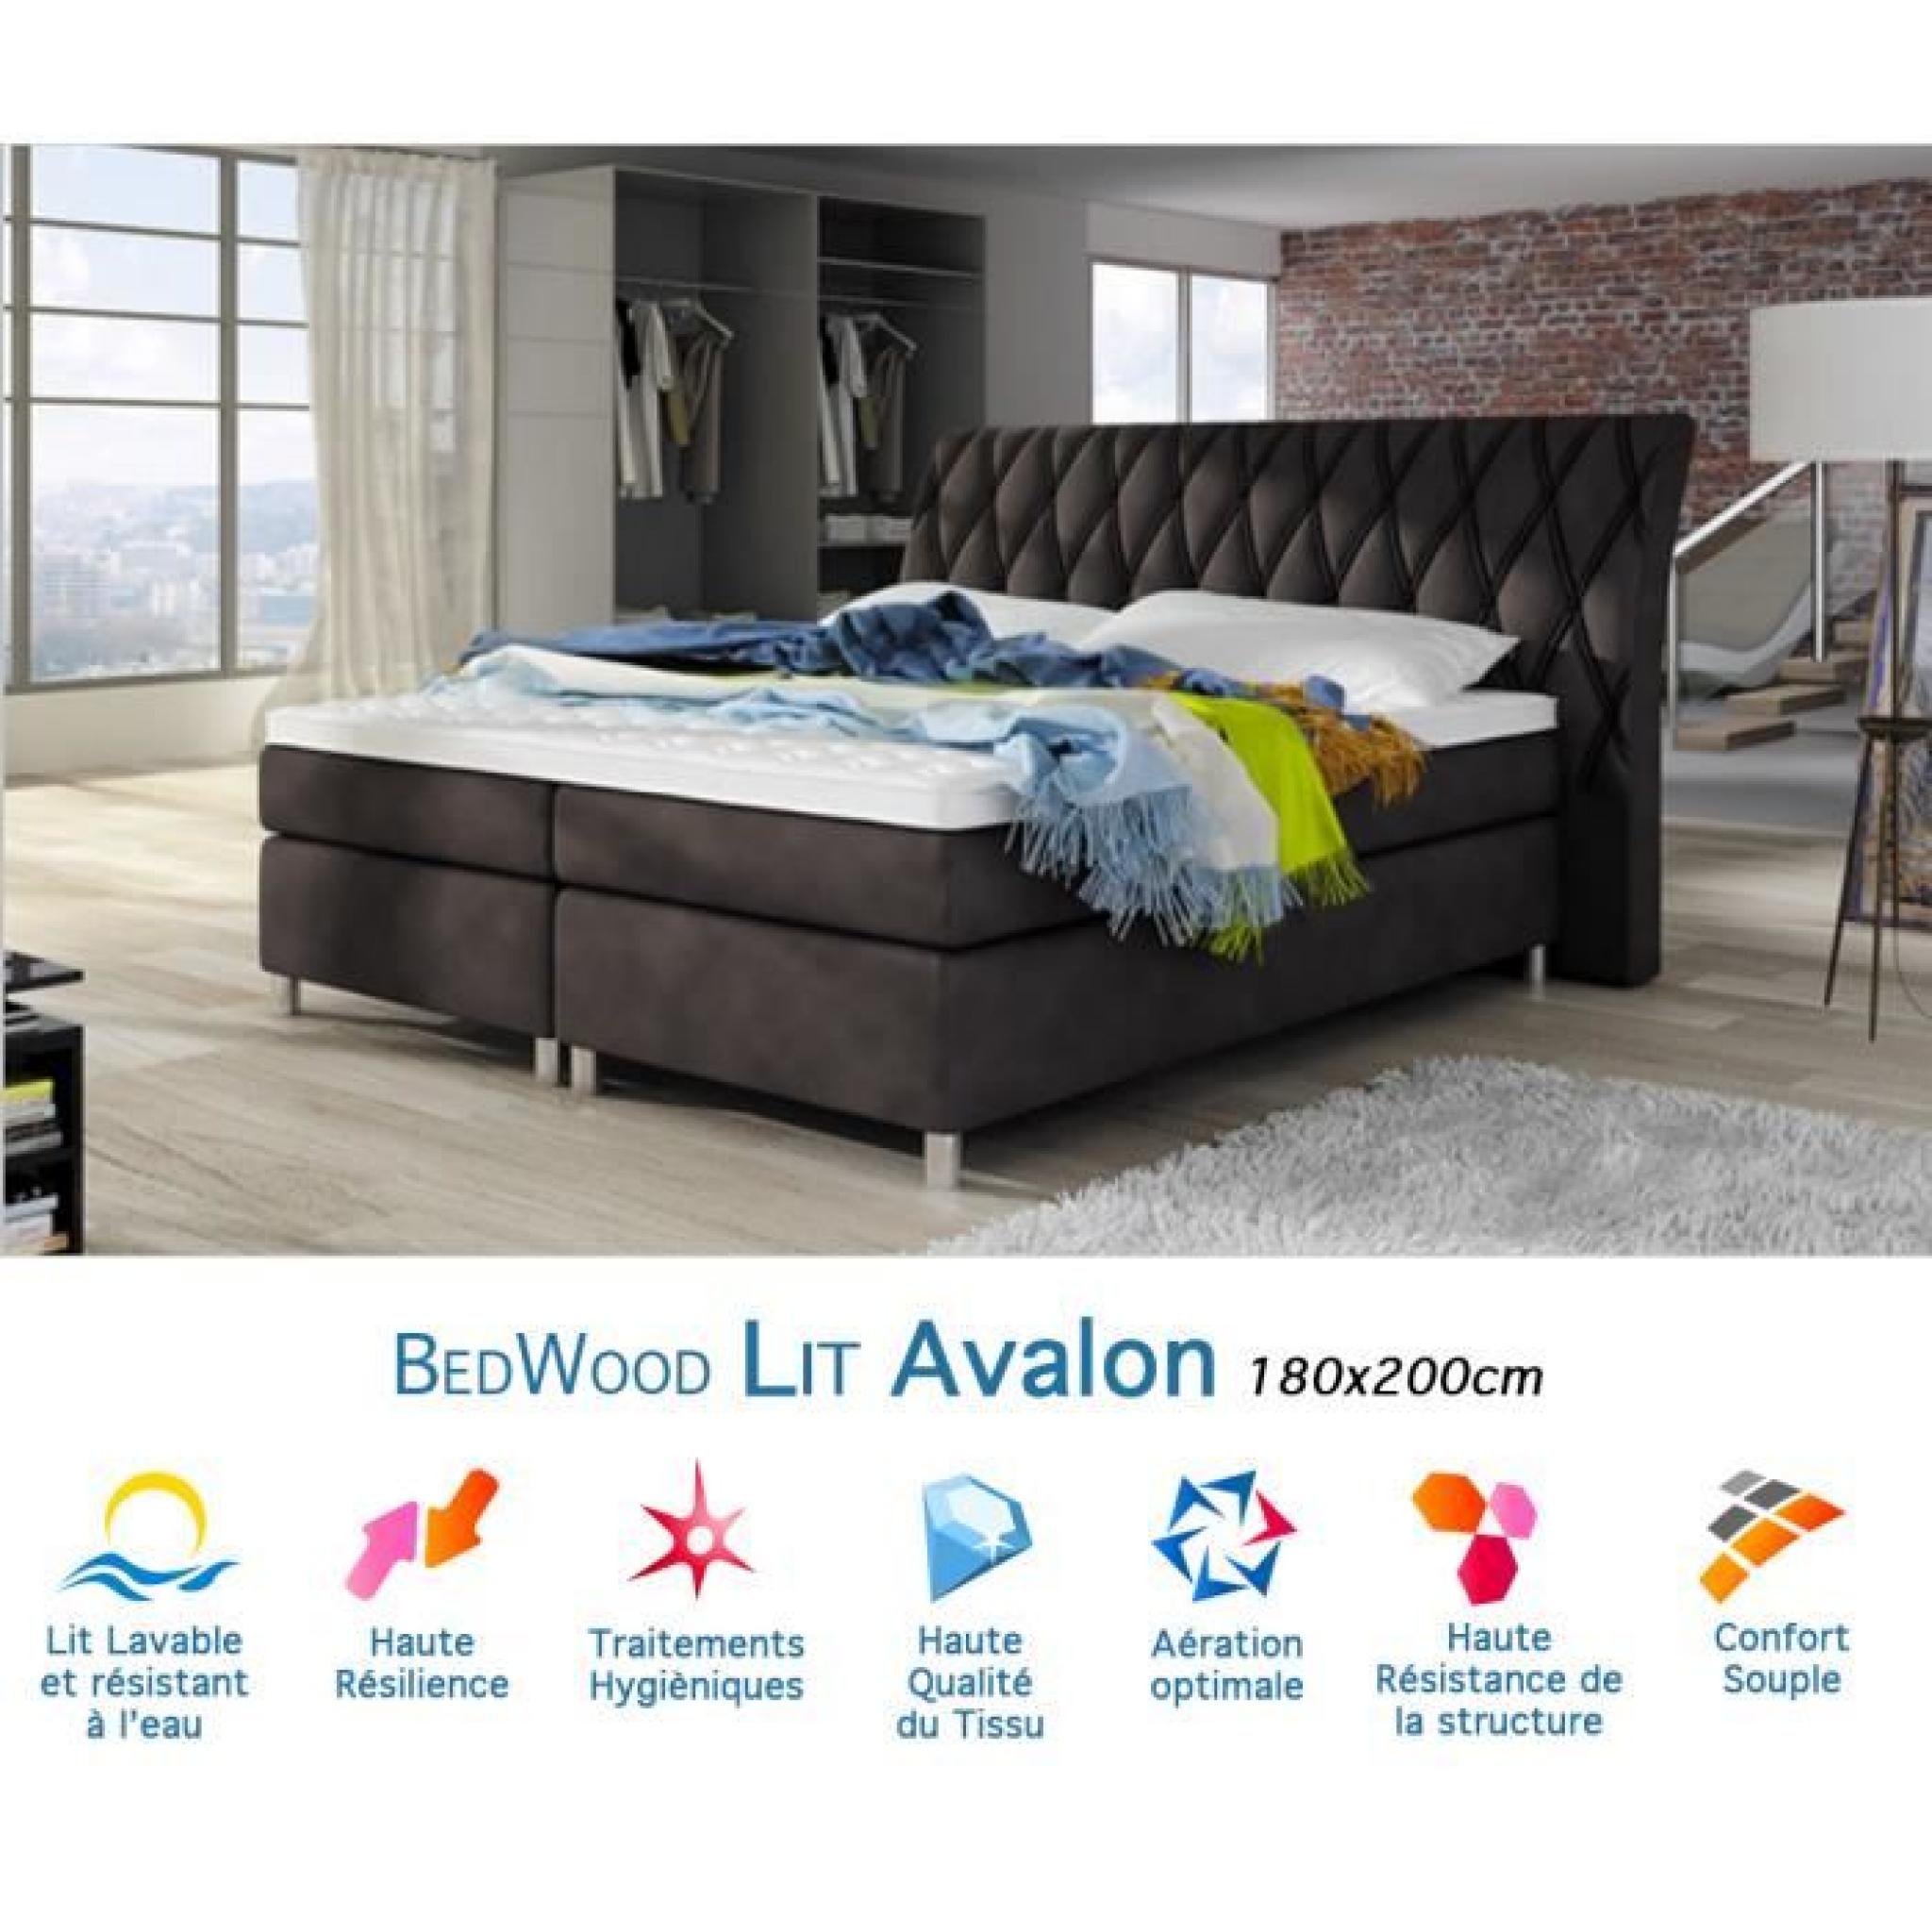 Lit Design Bedwood Avalon 180x200cm